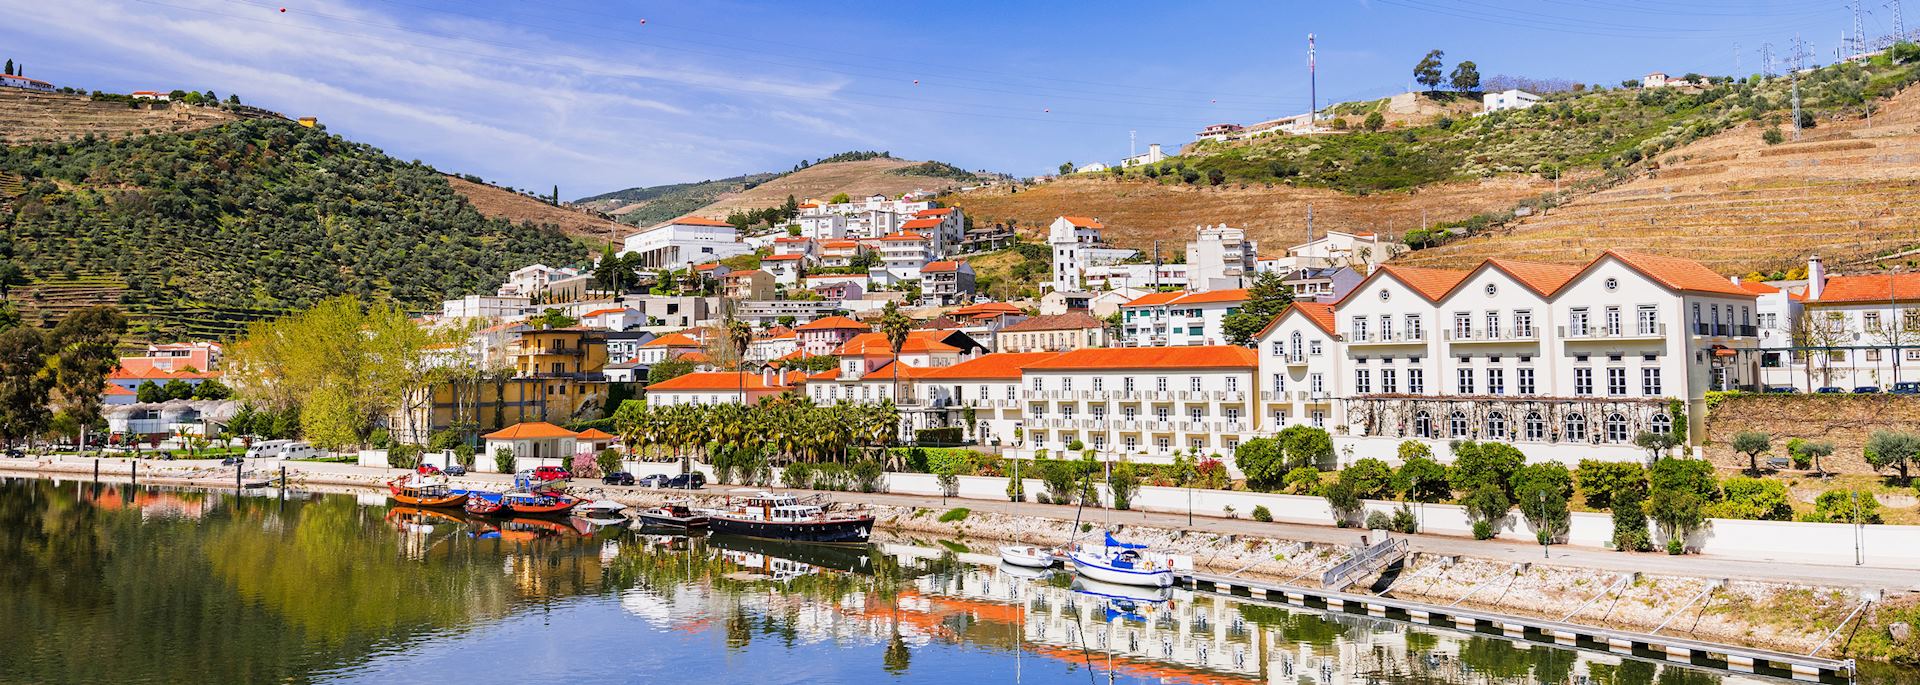 Riverside, Douro Valley